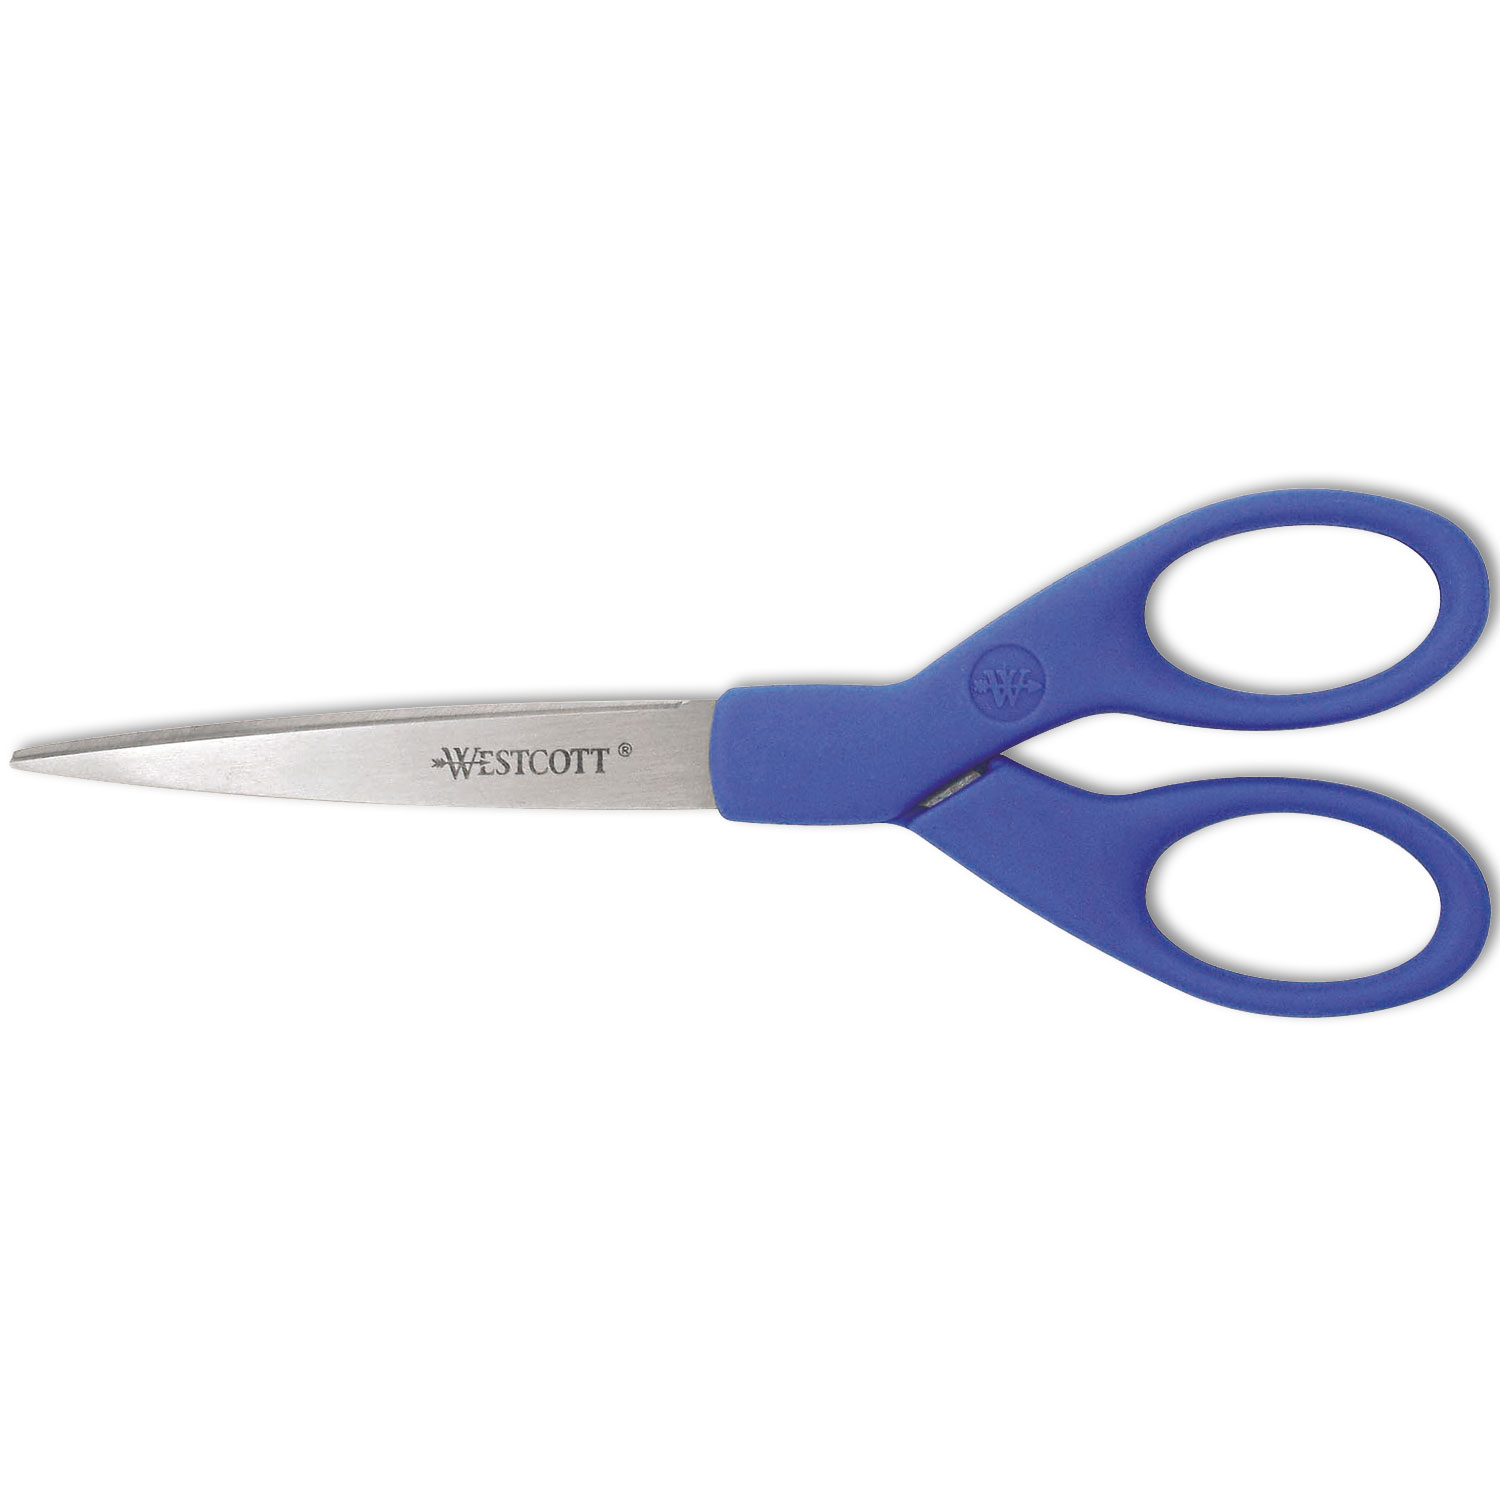  Westcott 44217 Preferred Line Stainless Steel Scissors, 7 Long, 2.5 Cut Length, Blue Straight Handle (ACM44217) 